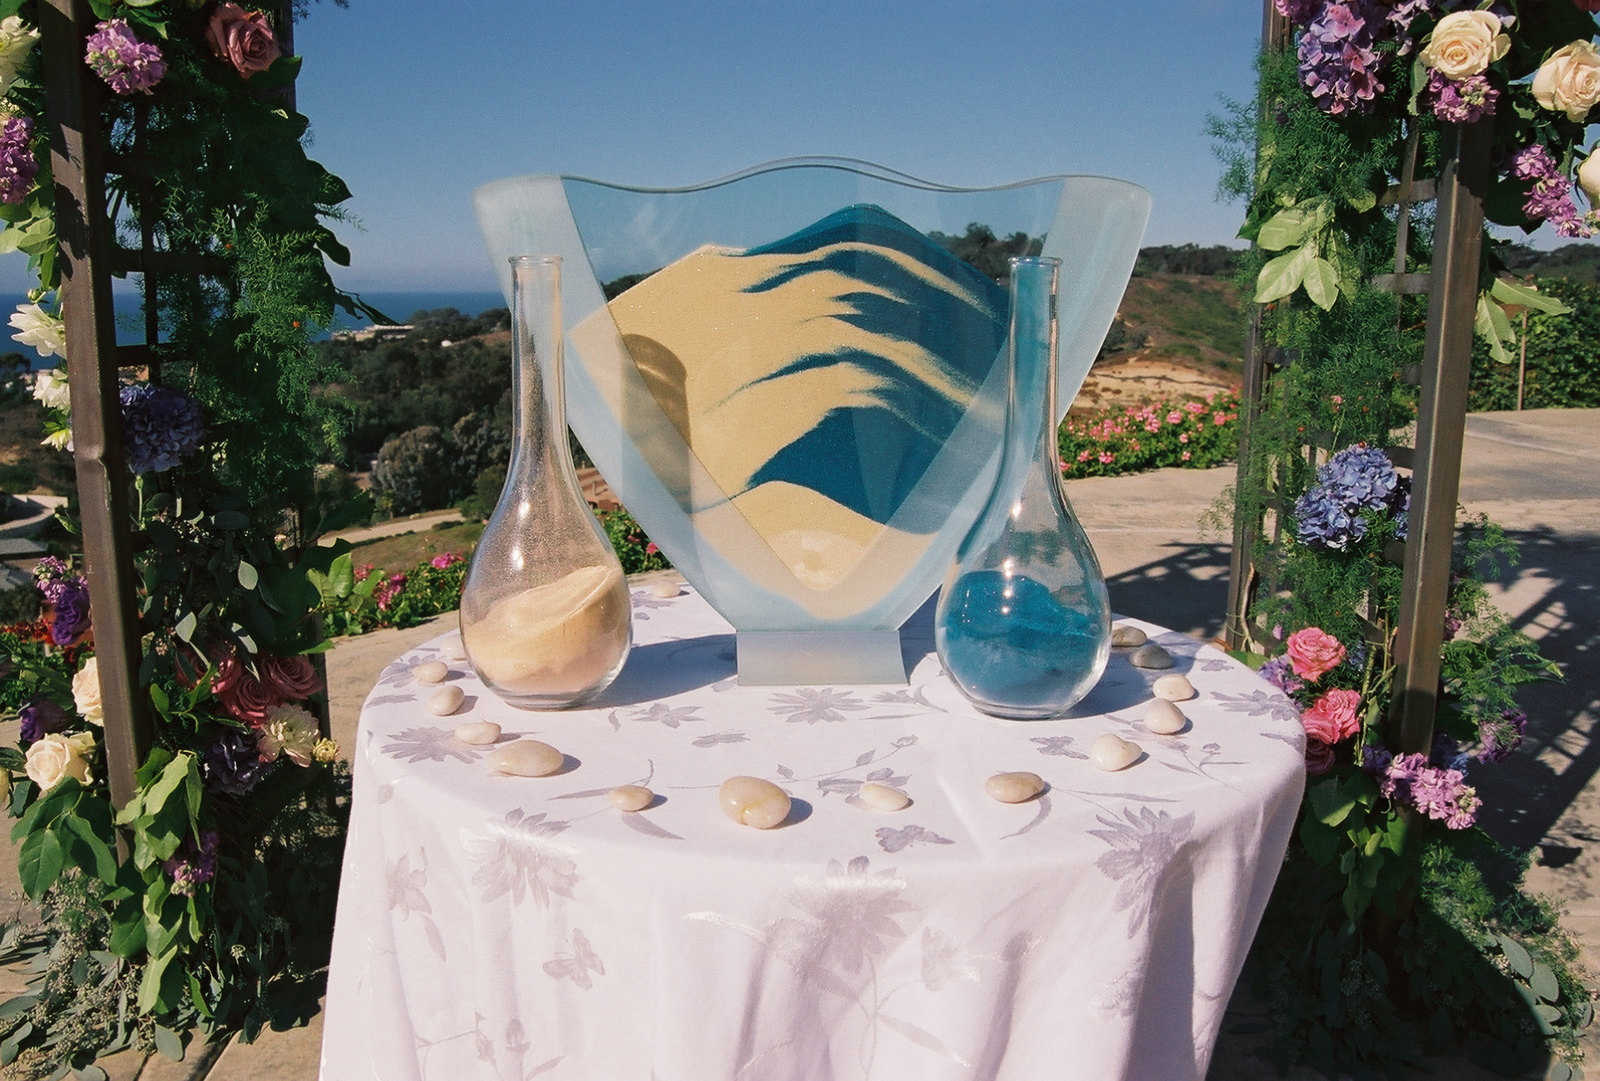 sand ceremony at wedding ceremony, poured into vase 